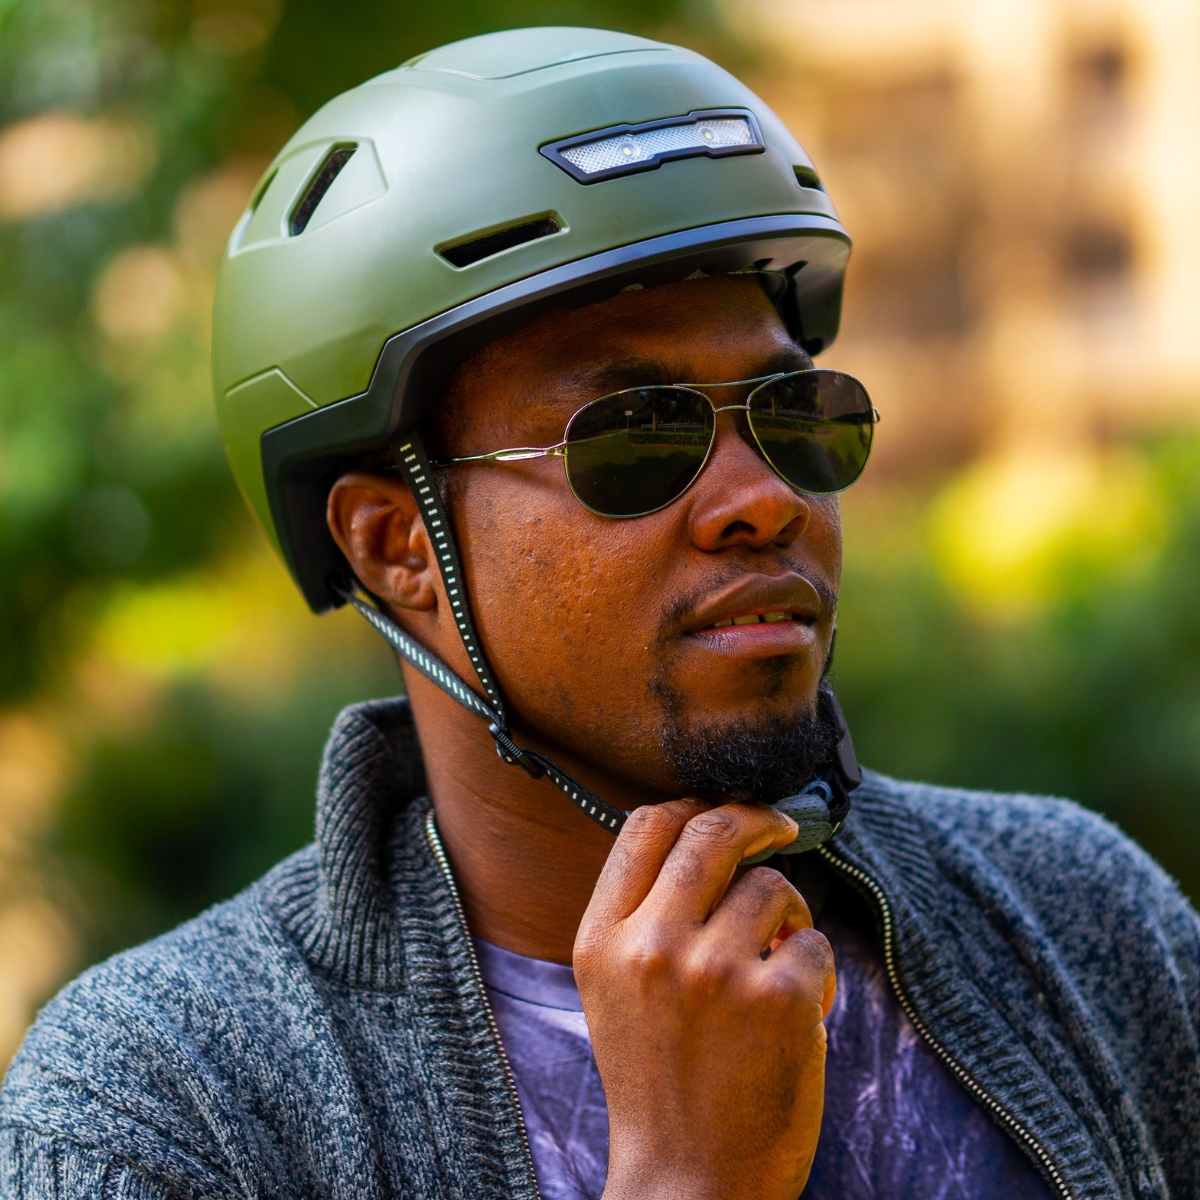 Moss | XNITO Helmet | E-bike Helmet